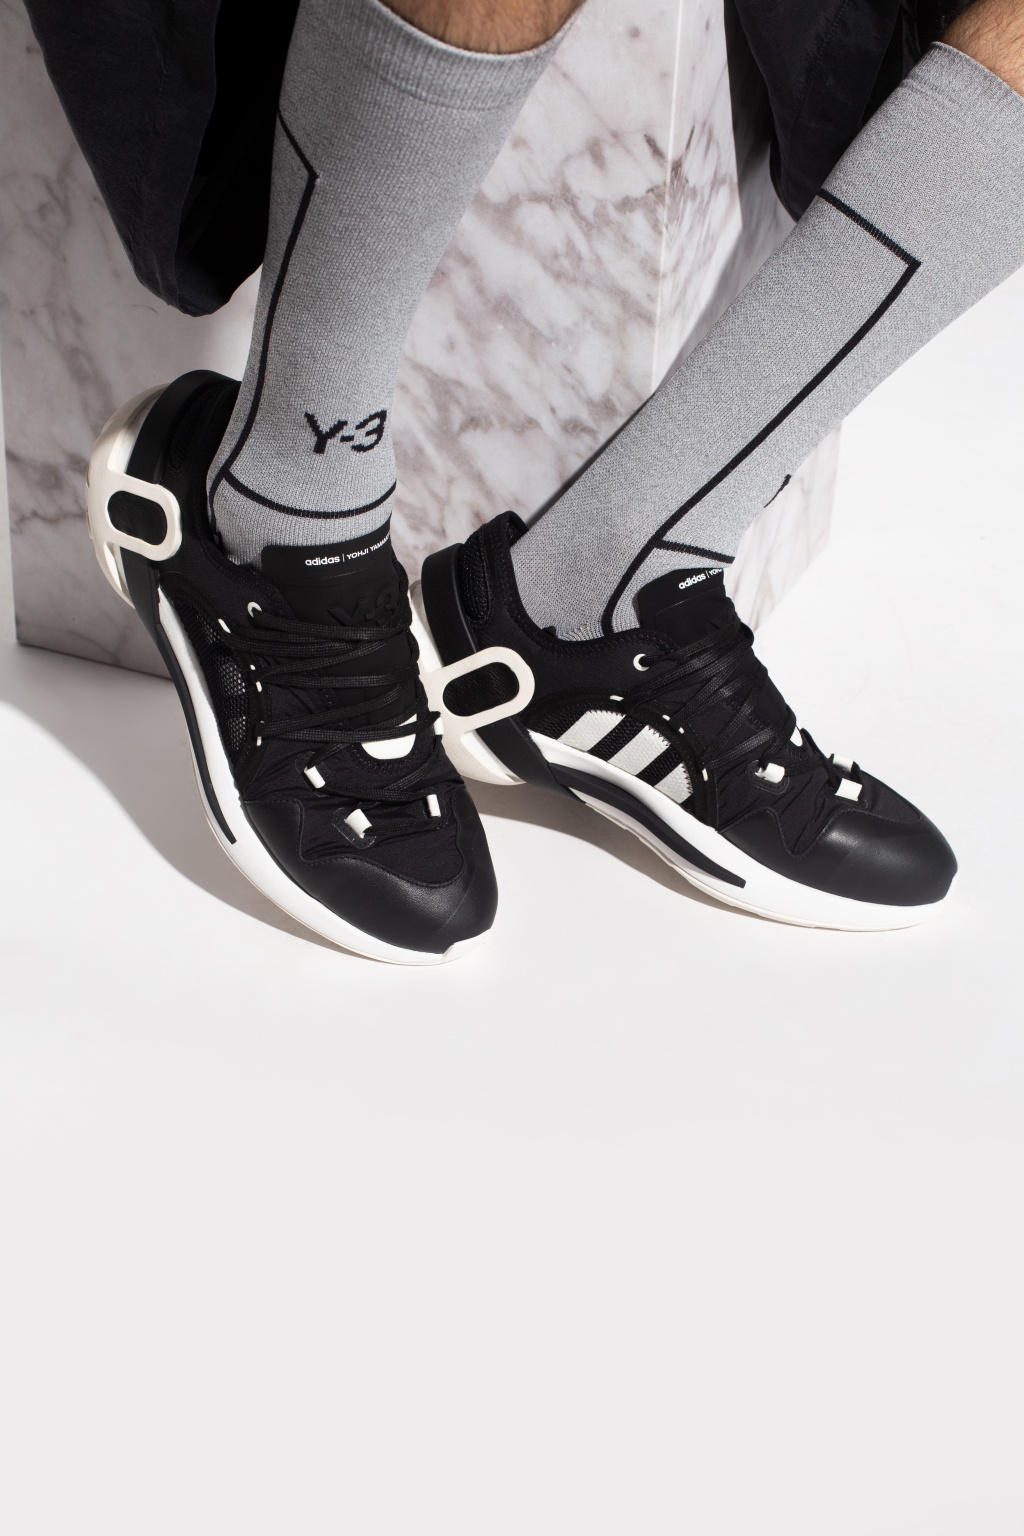 Y-3 Yohji Yamamoto 'Idoso Boost' sneakers | Men's Shoes | Vitkac